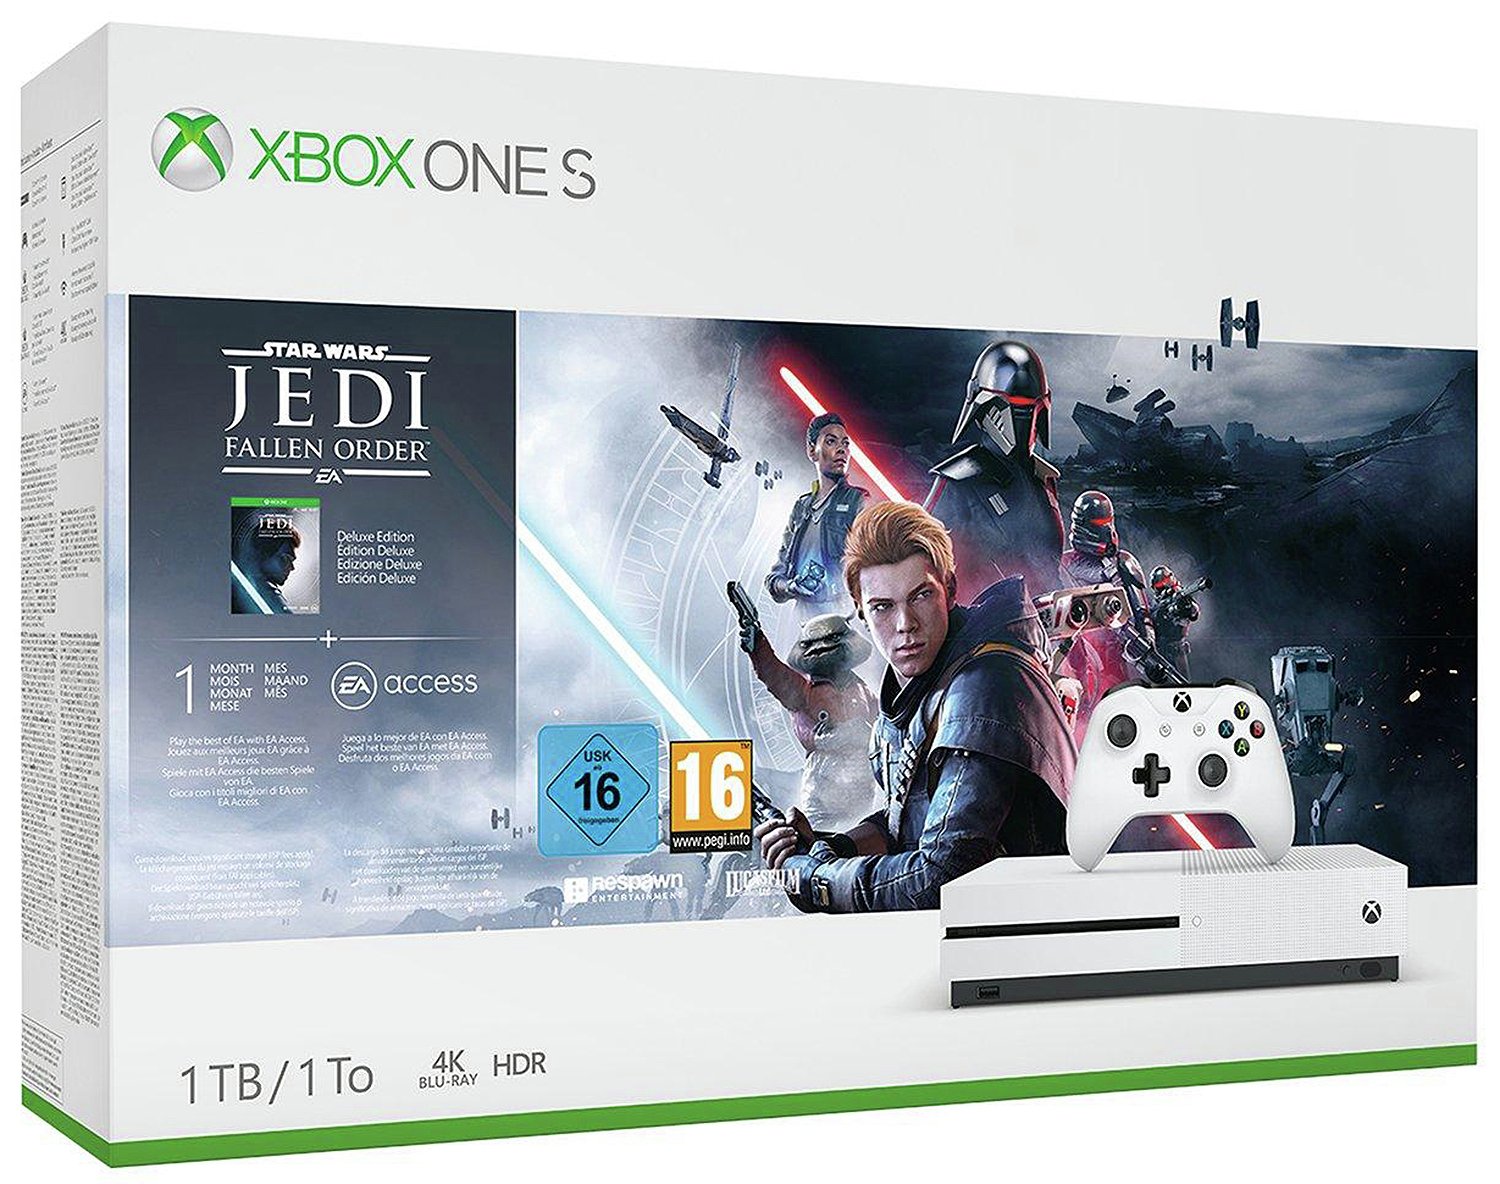 Xbox One S 1TB Console & Star Wars Jedi: Fallen Order Bundle Review